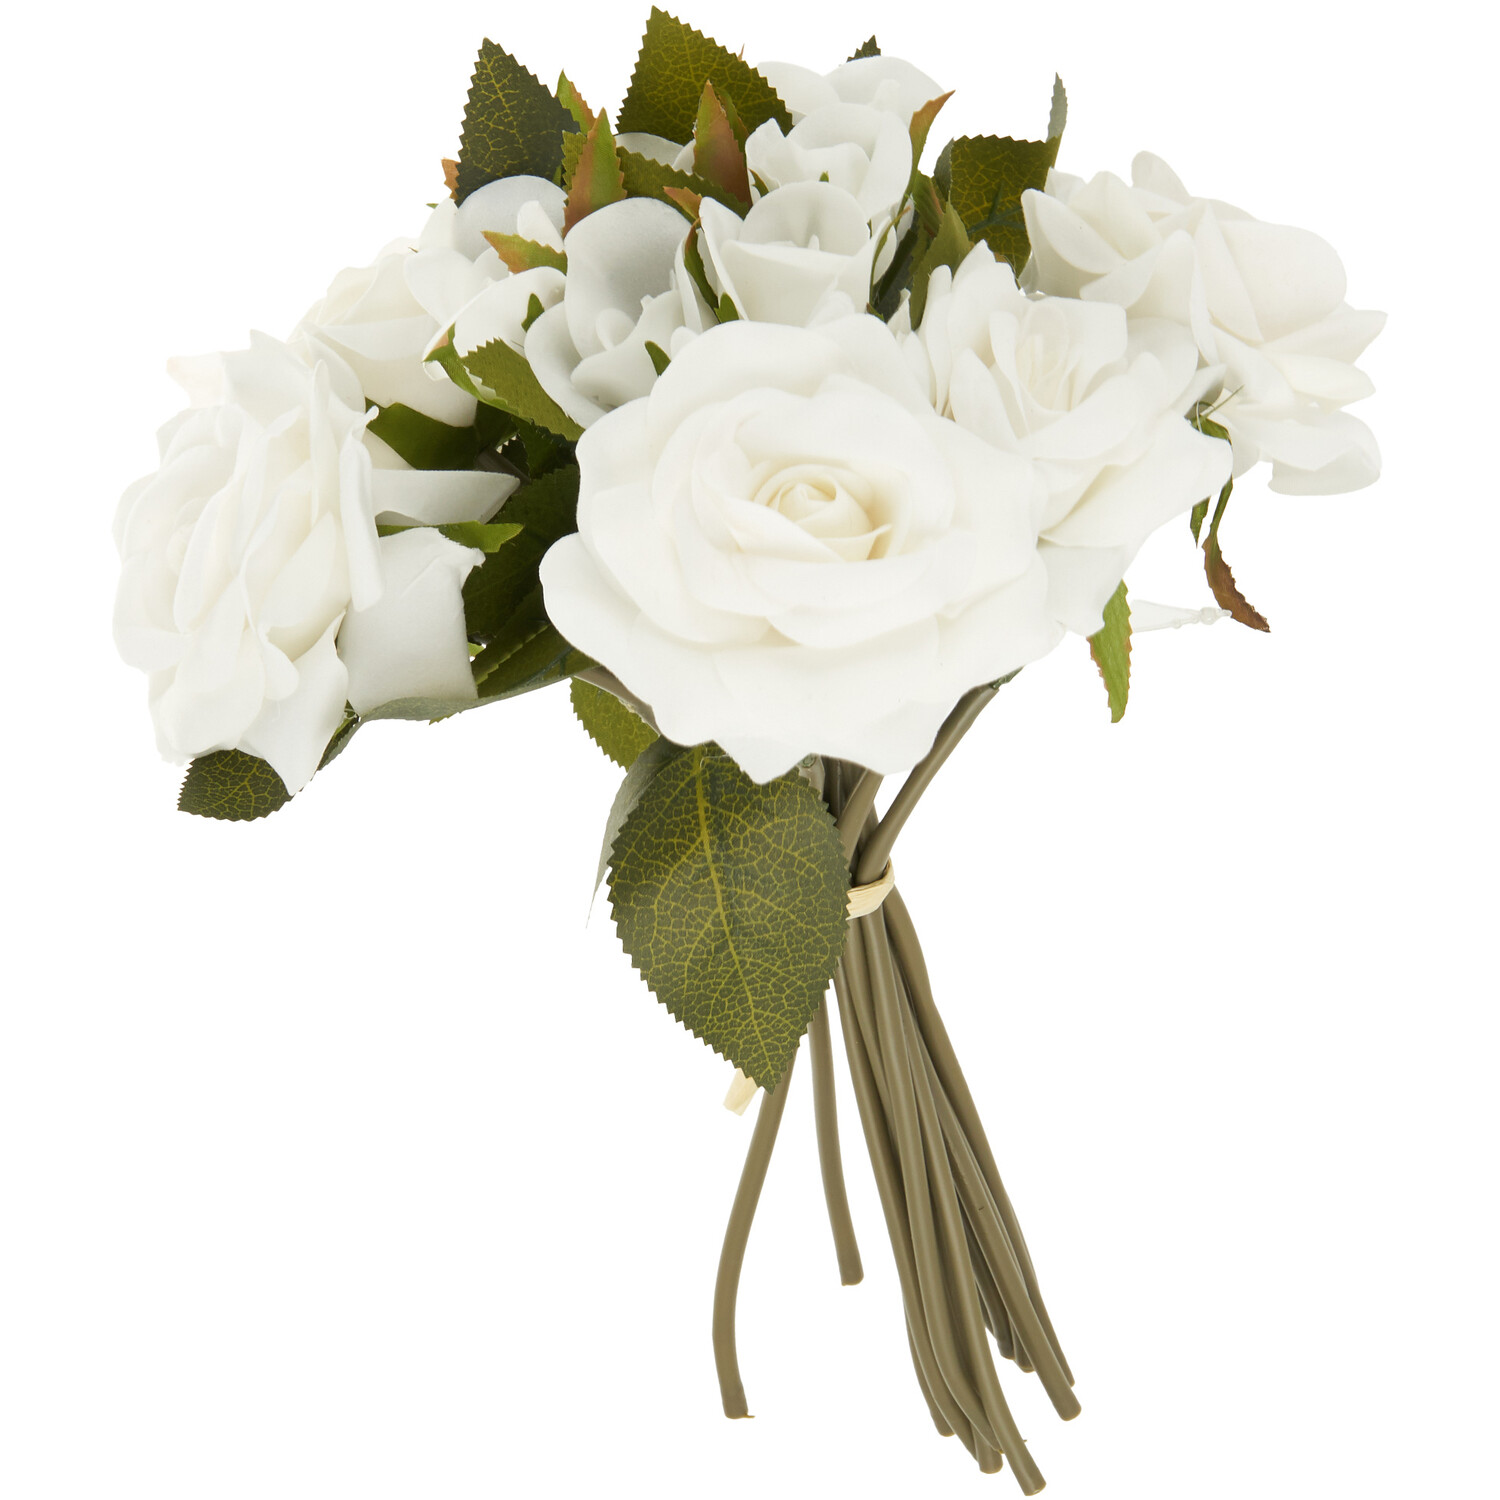 Supreme Handtie Rose Bouquet - White Image 2